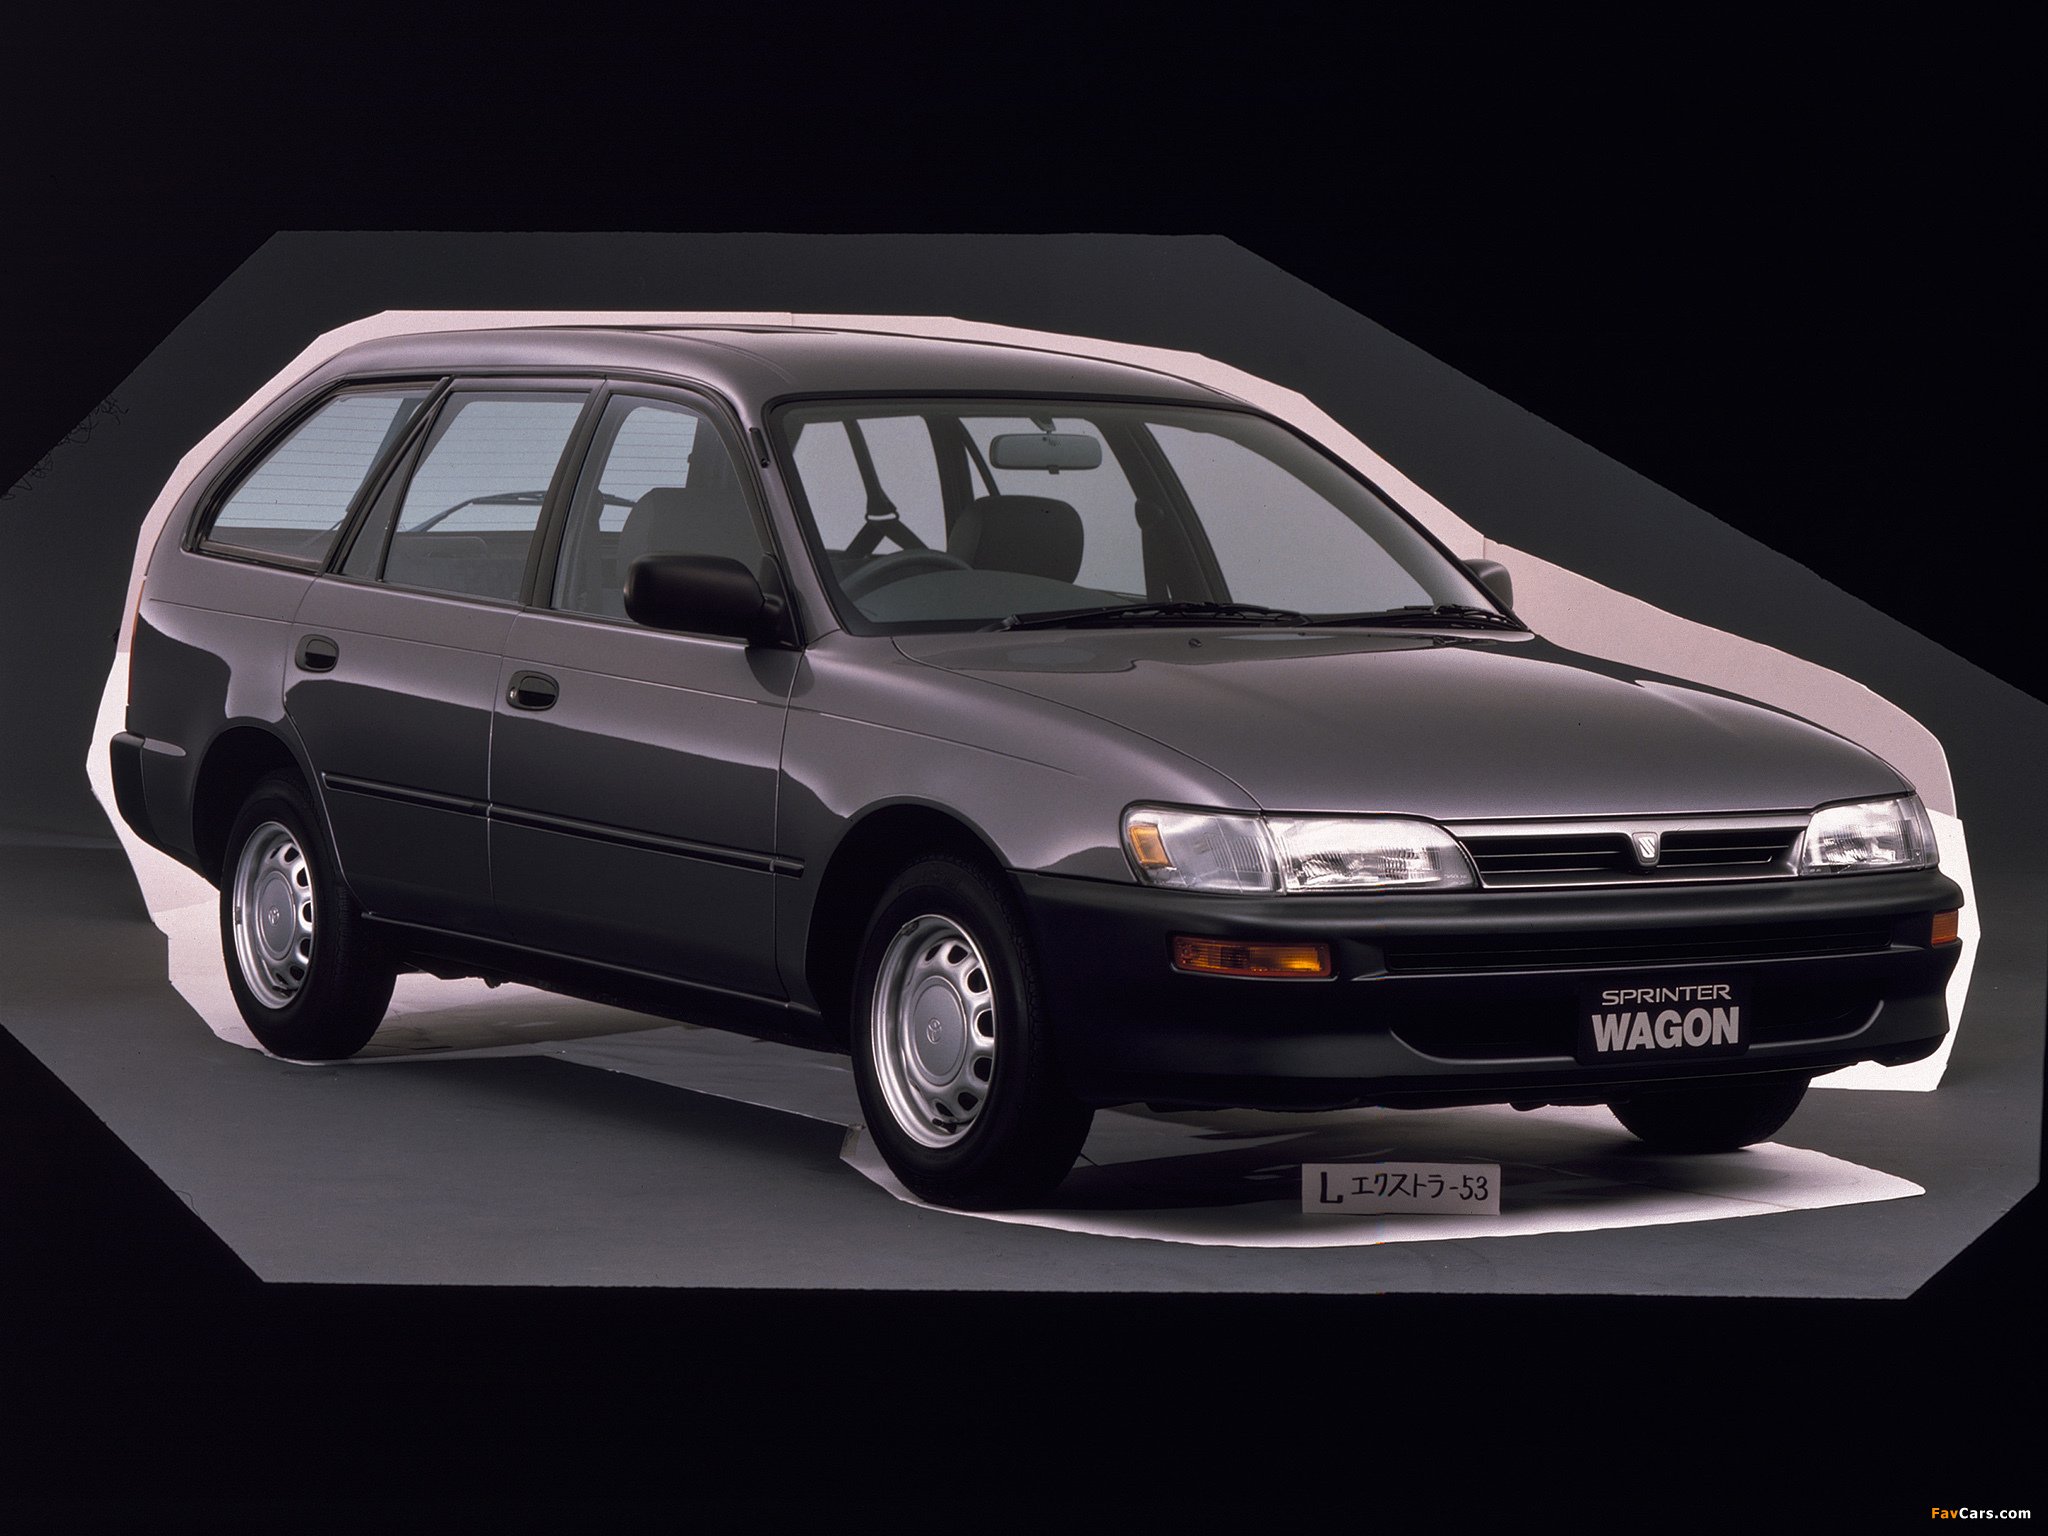 Спринтер универсал. Toyota Sprinter Wagon. Toyota Sprinter 1991 универсал. Toyota Corolla Wagon 2002. Тойота Королла Спринтер.